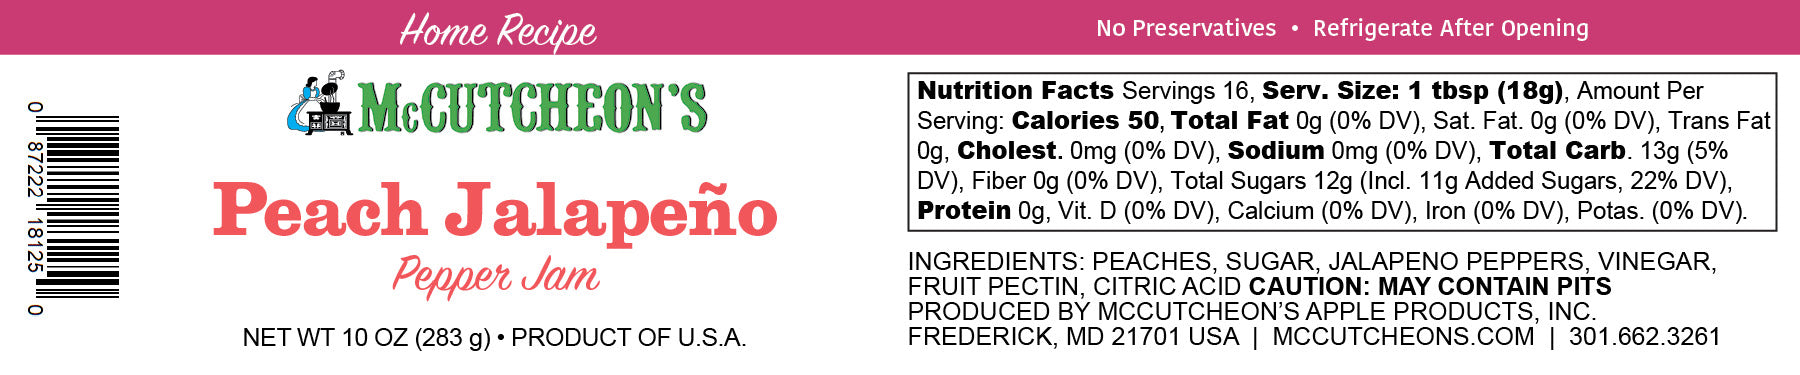 nutritional label for McCutcheon's peach jalapeño pepper jam